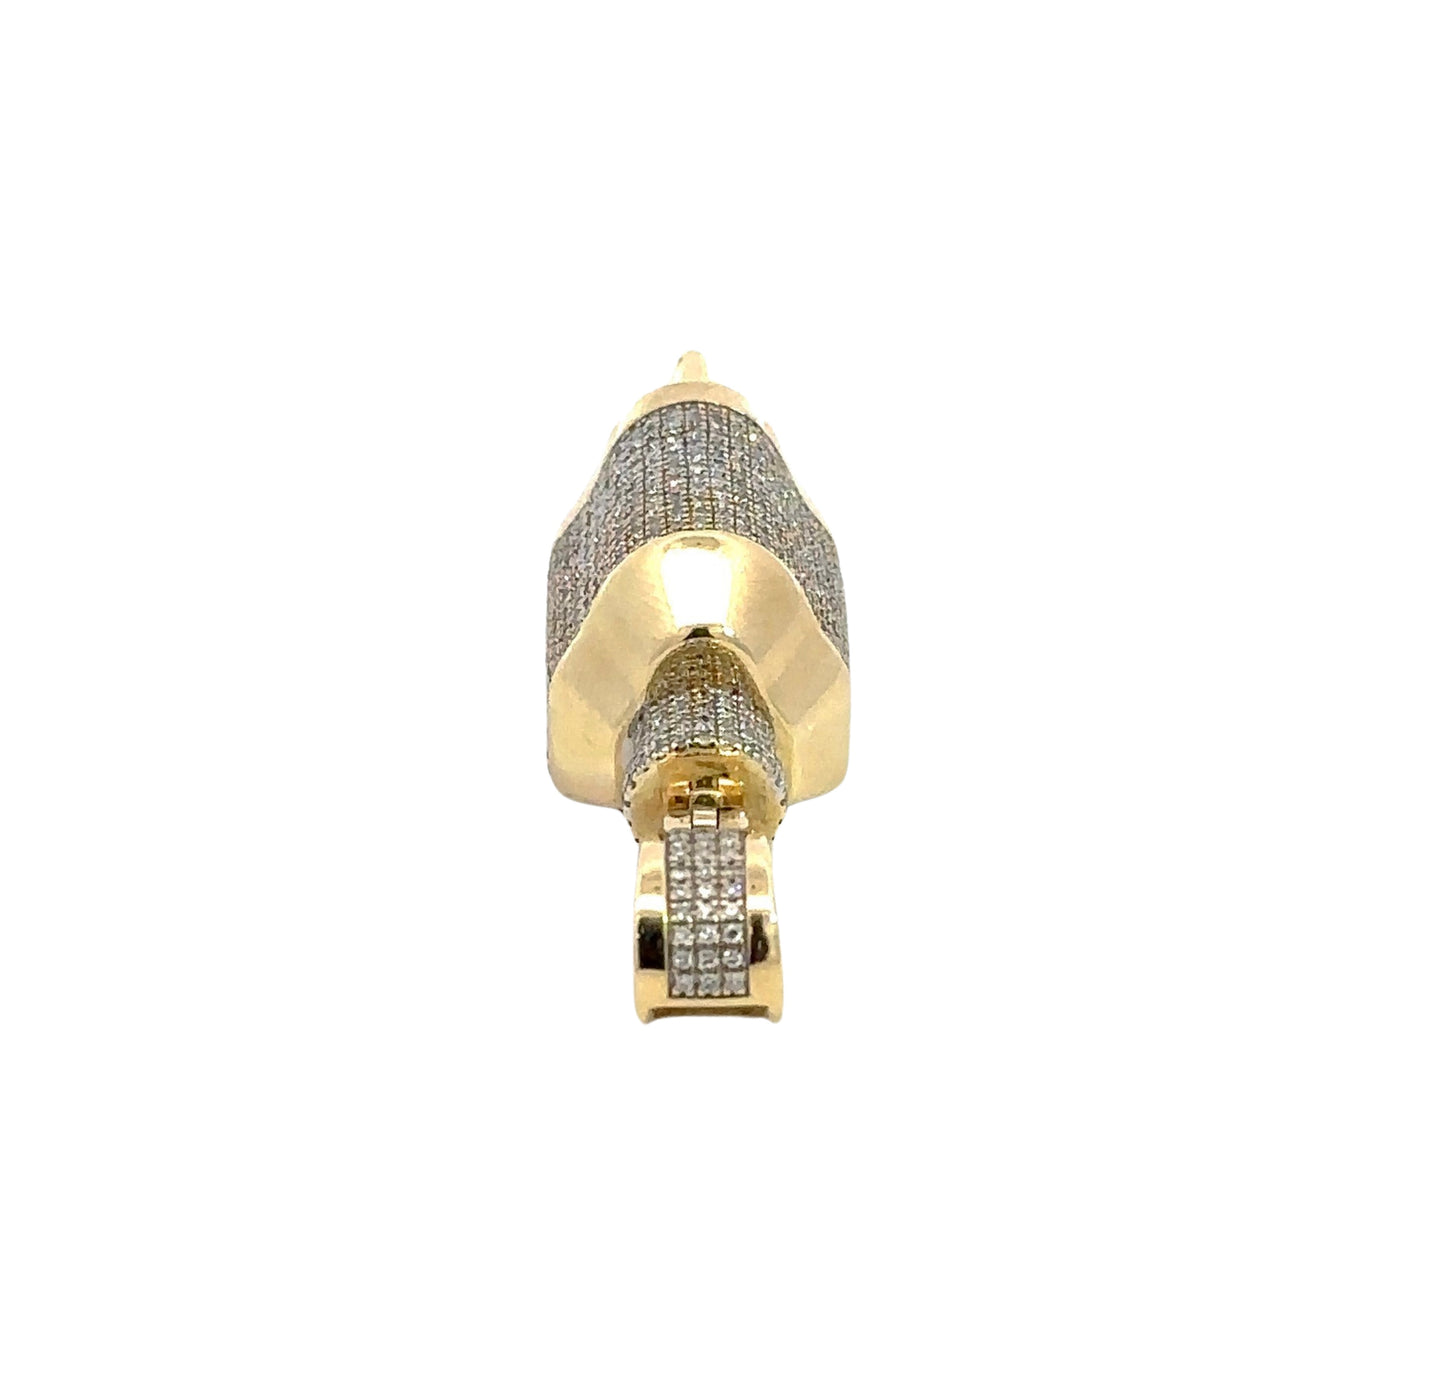 Top of yellow gold plug pendant with diamonds